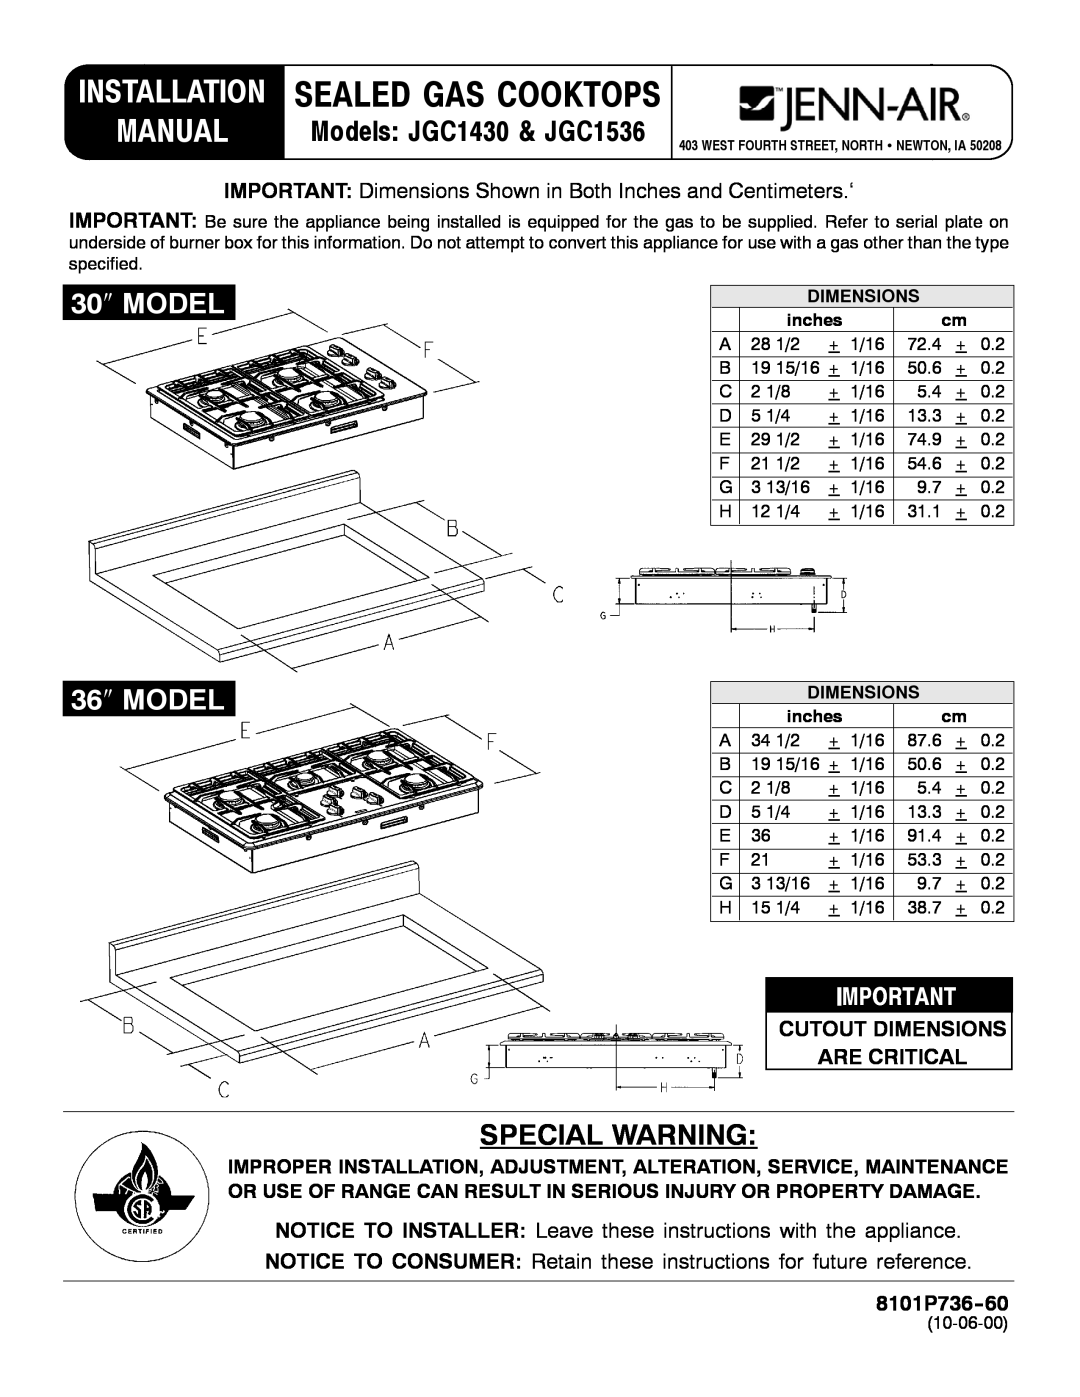 Jenn-Air installation manual Manual, 30″ MODEL, 36″ MODEL, Special Warning, Models JGC1430 & JGC1536, 8101P736-60 